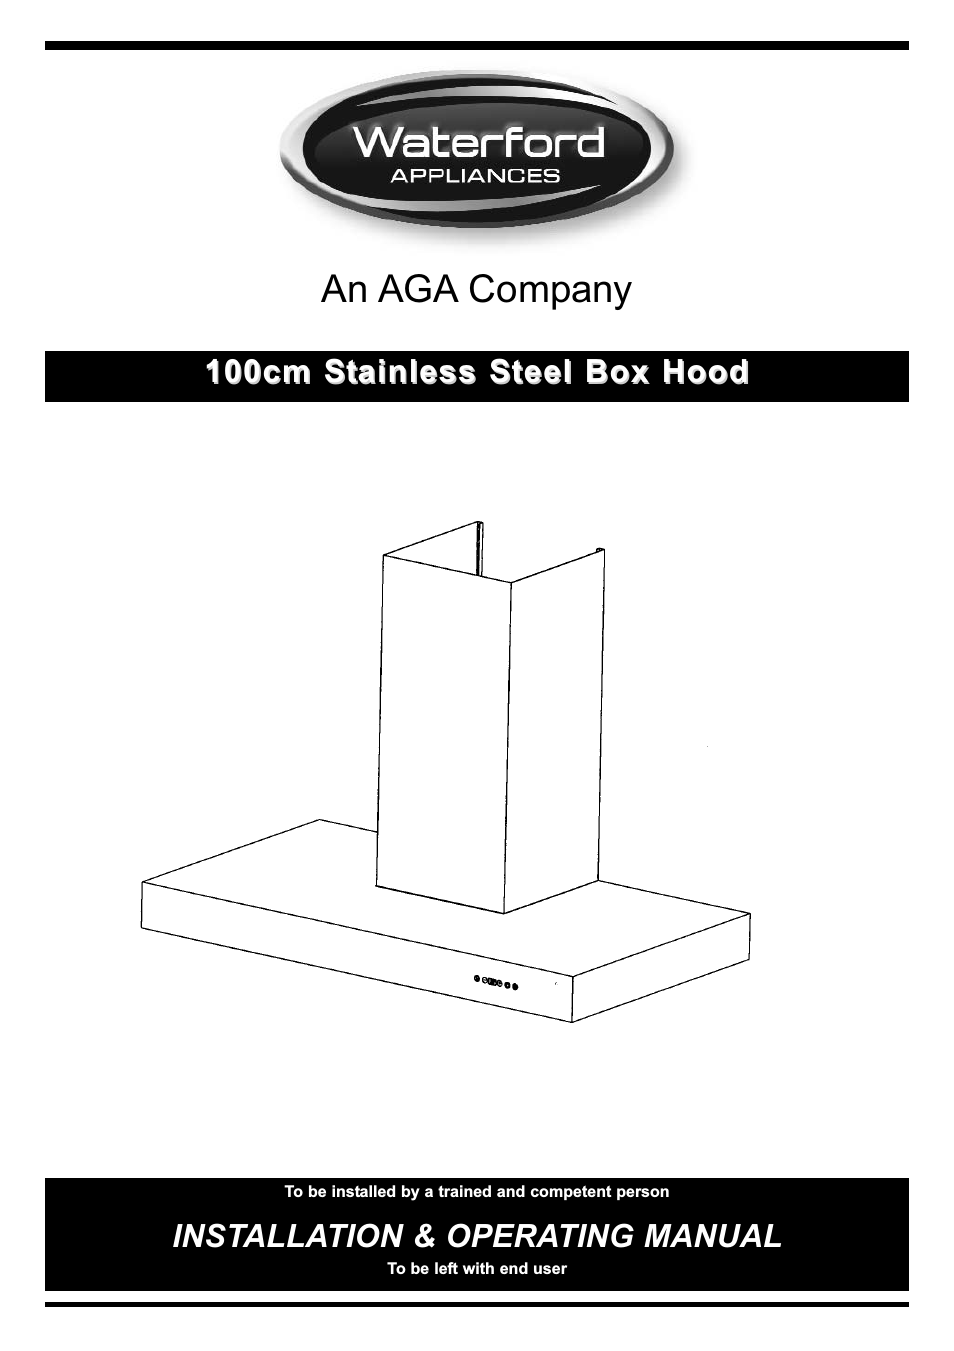 Stainless Steel Box Hood